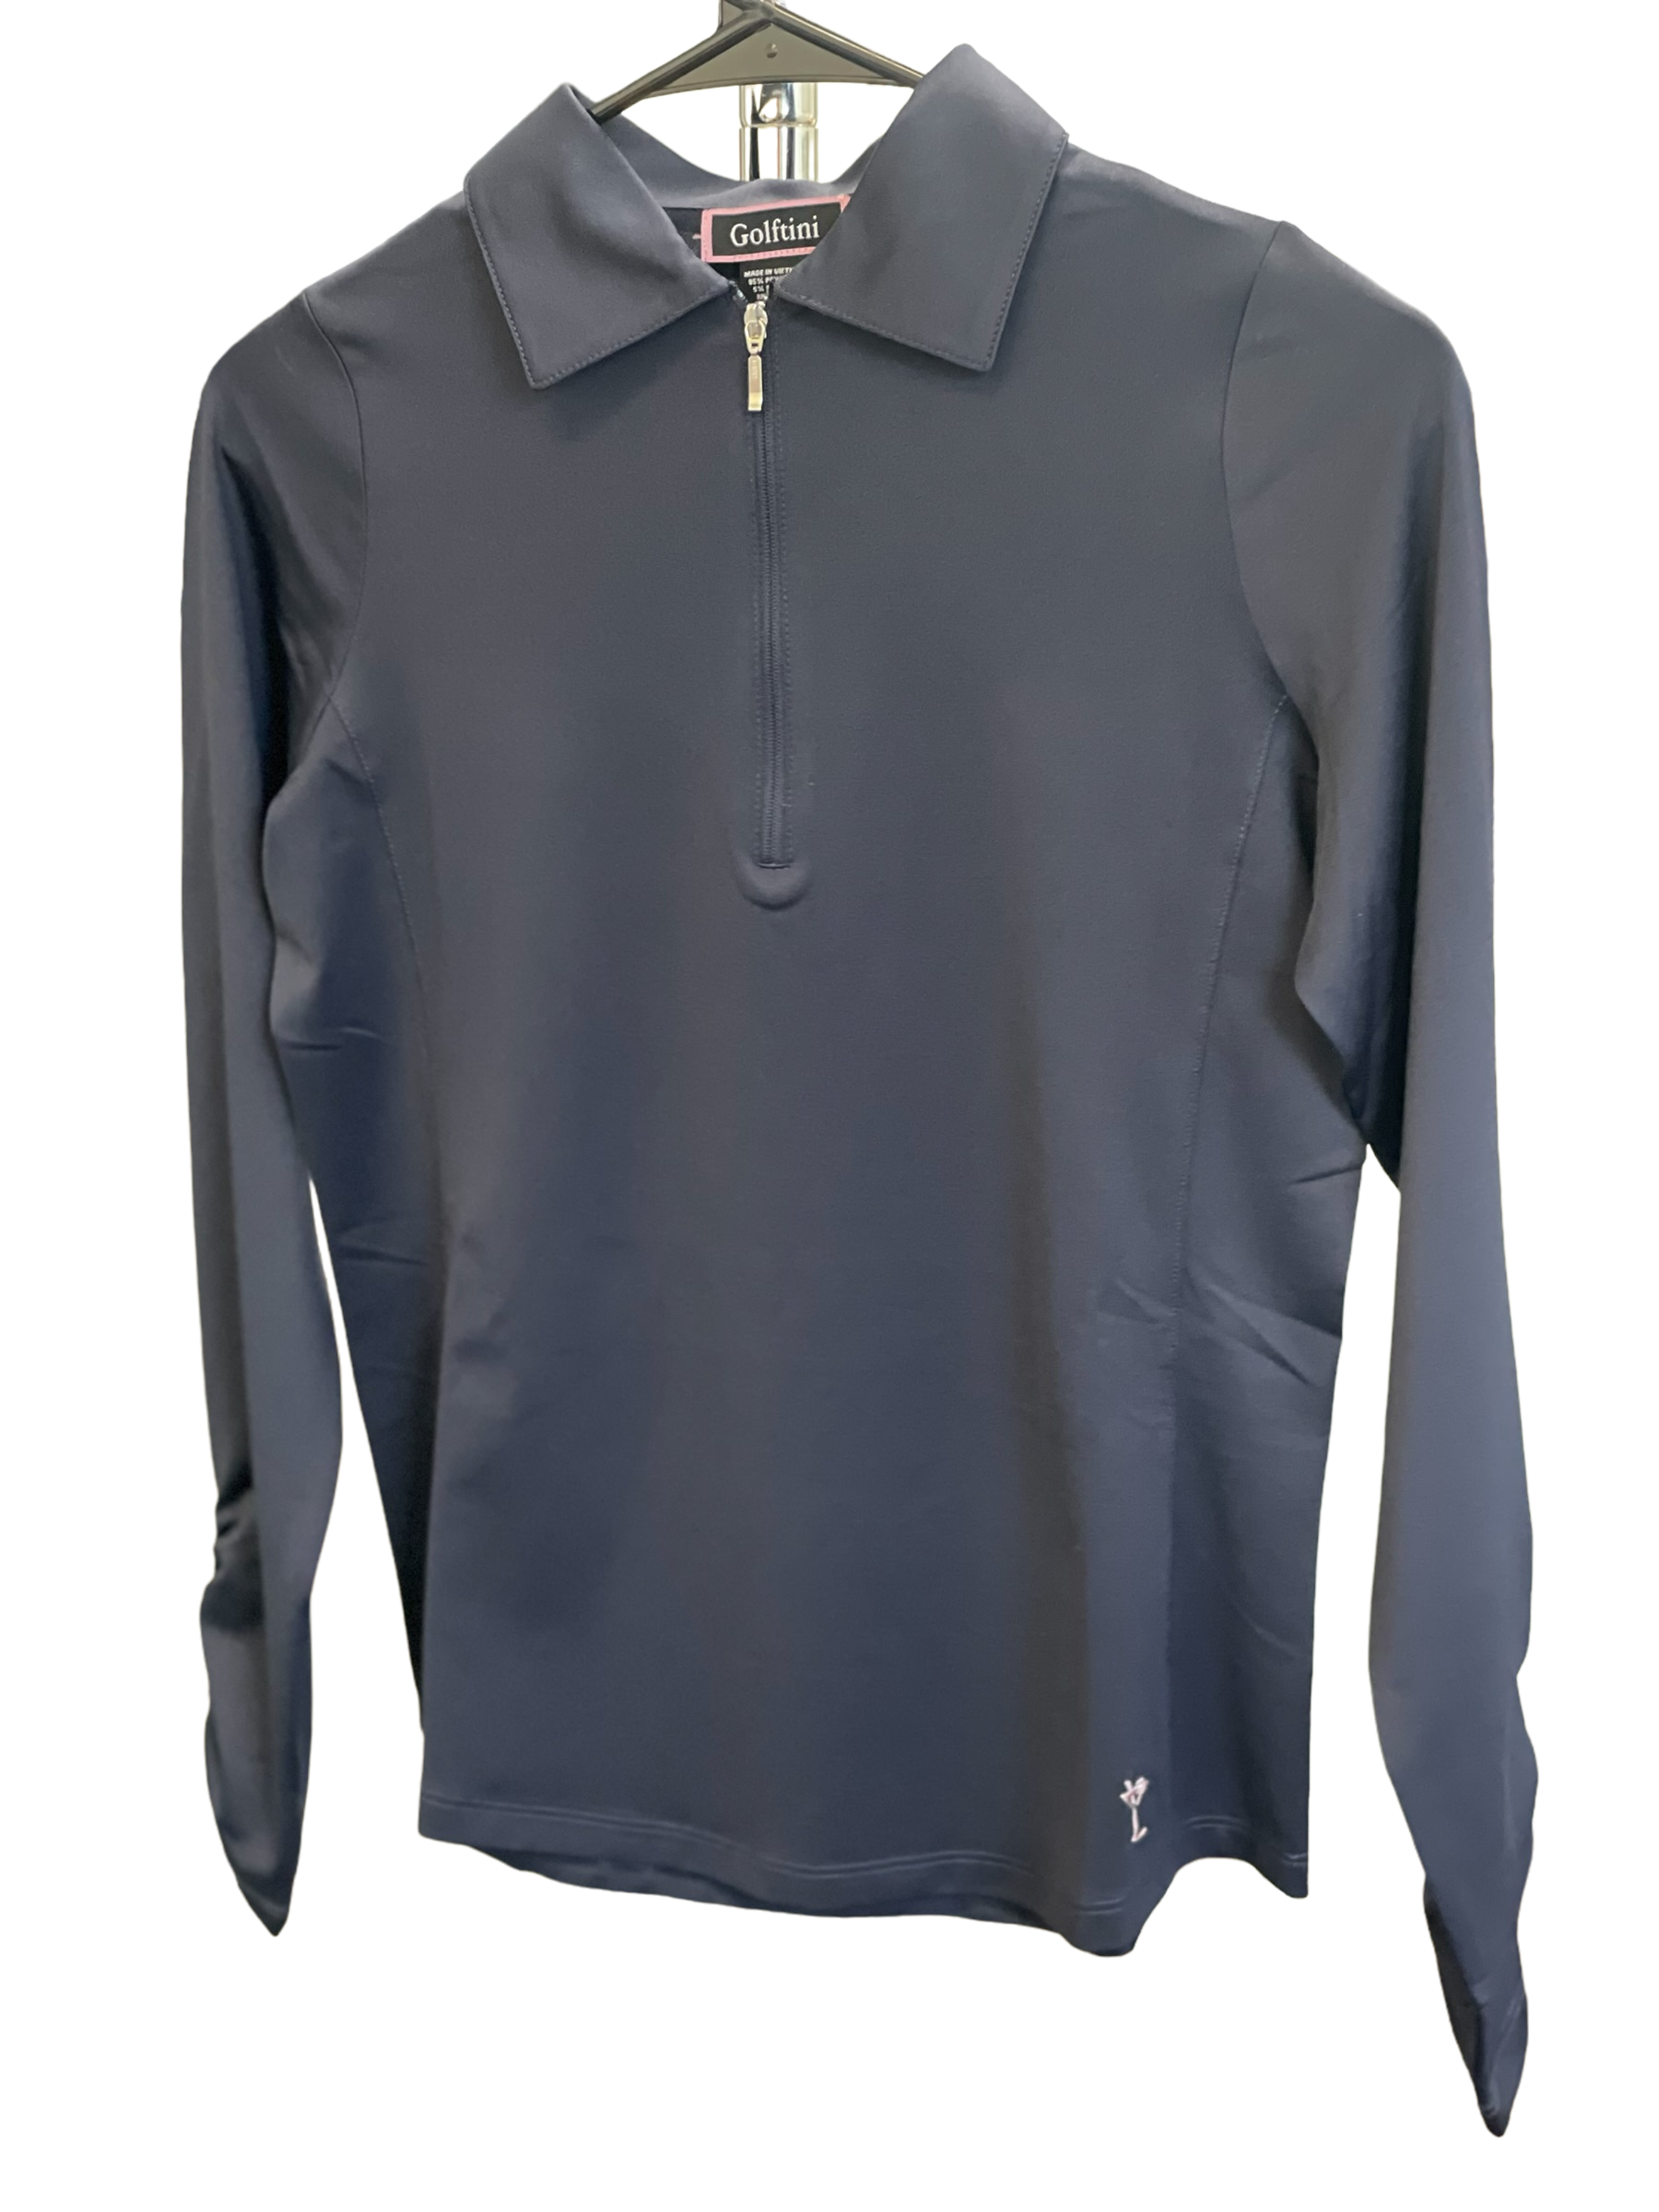 Golftini Ladies' Long Sleeve Zip Polo